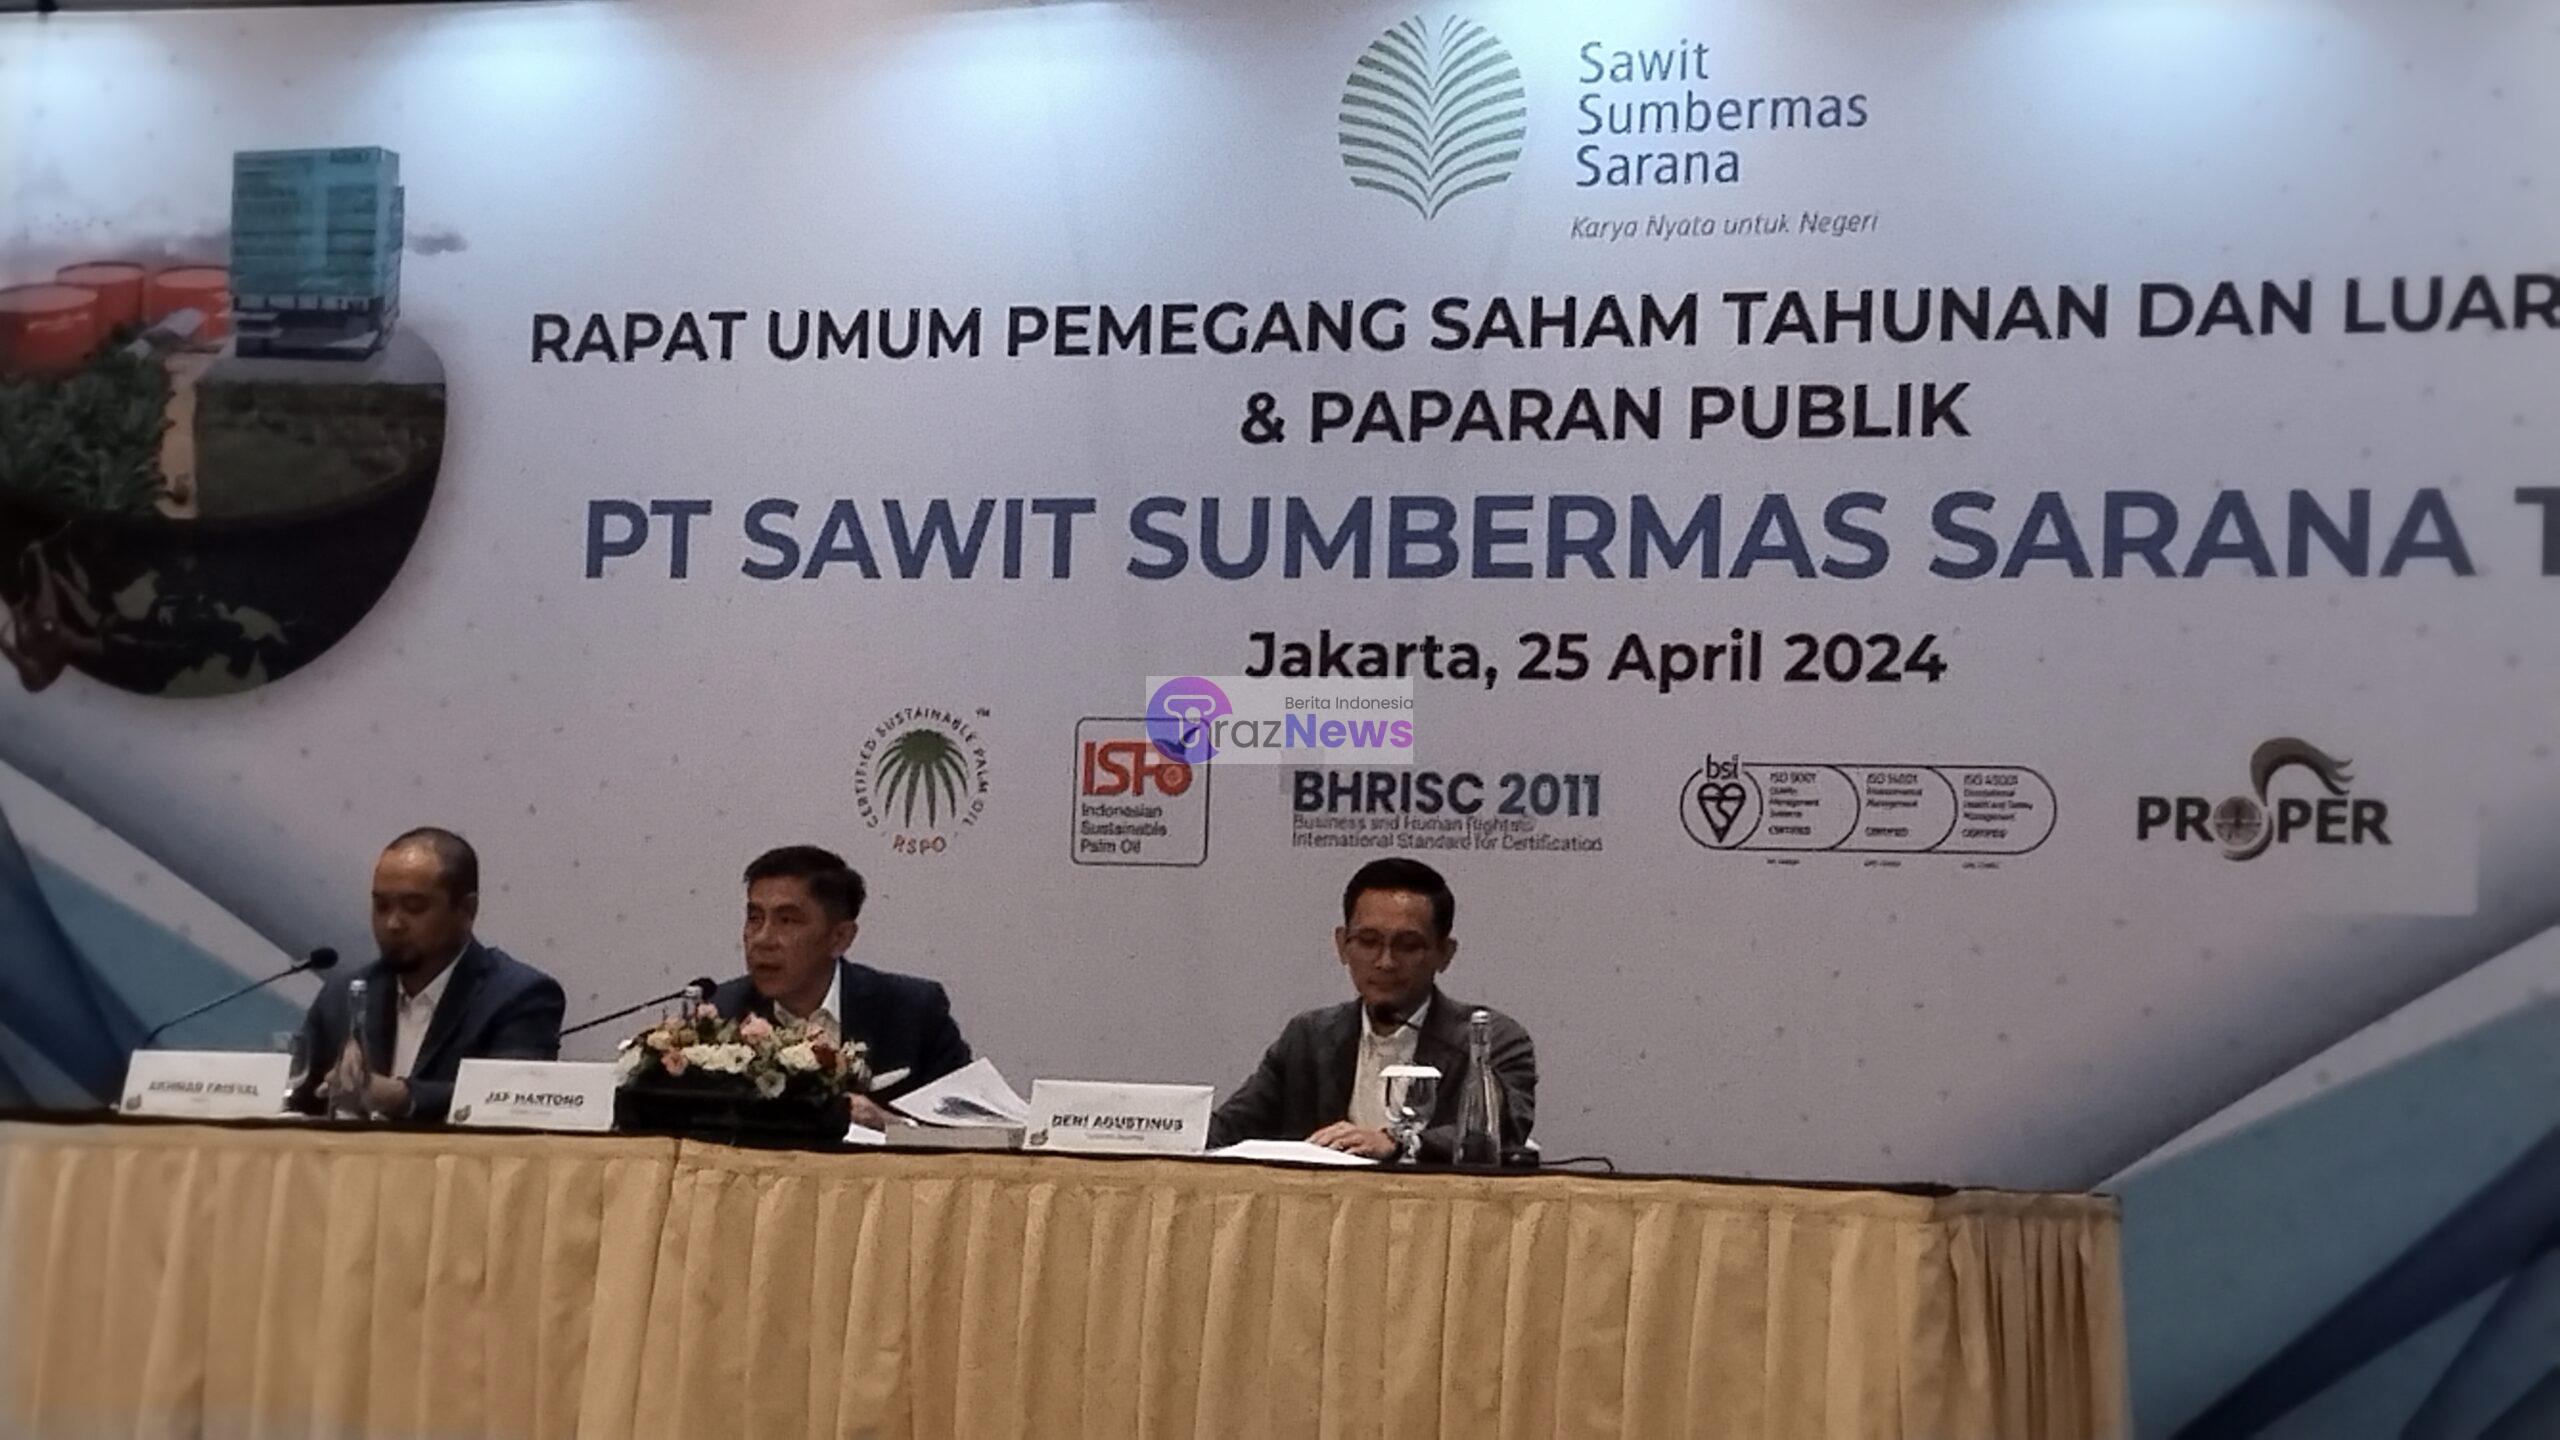 PT Sawit Sumbermas Sarana TBK, Rapat Umum Pemegang Saham Tahunan Dan Luar Biasa & Paparan Publik.